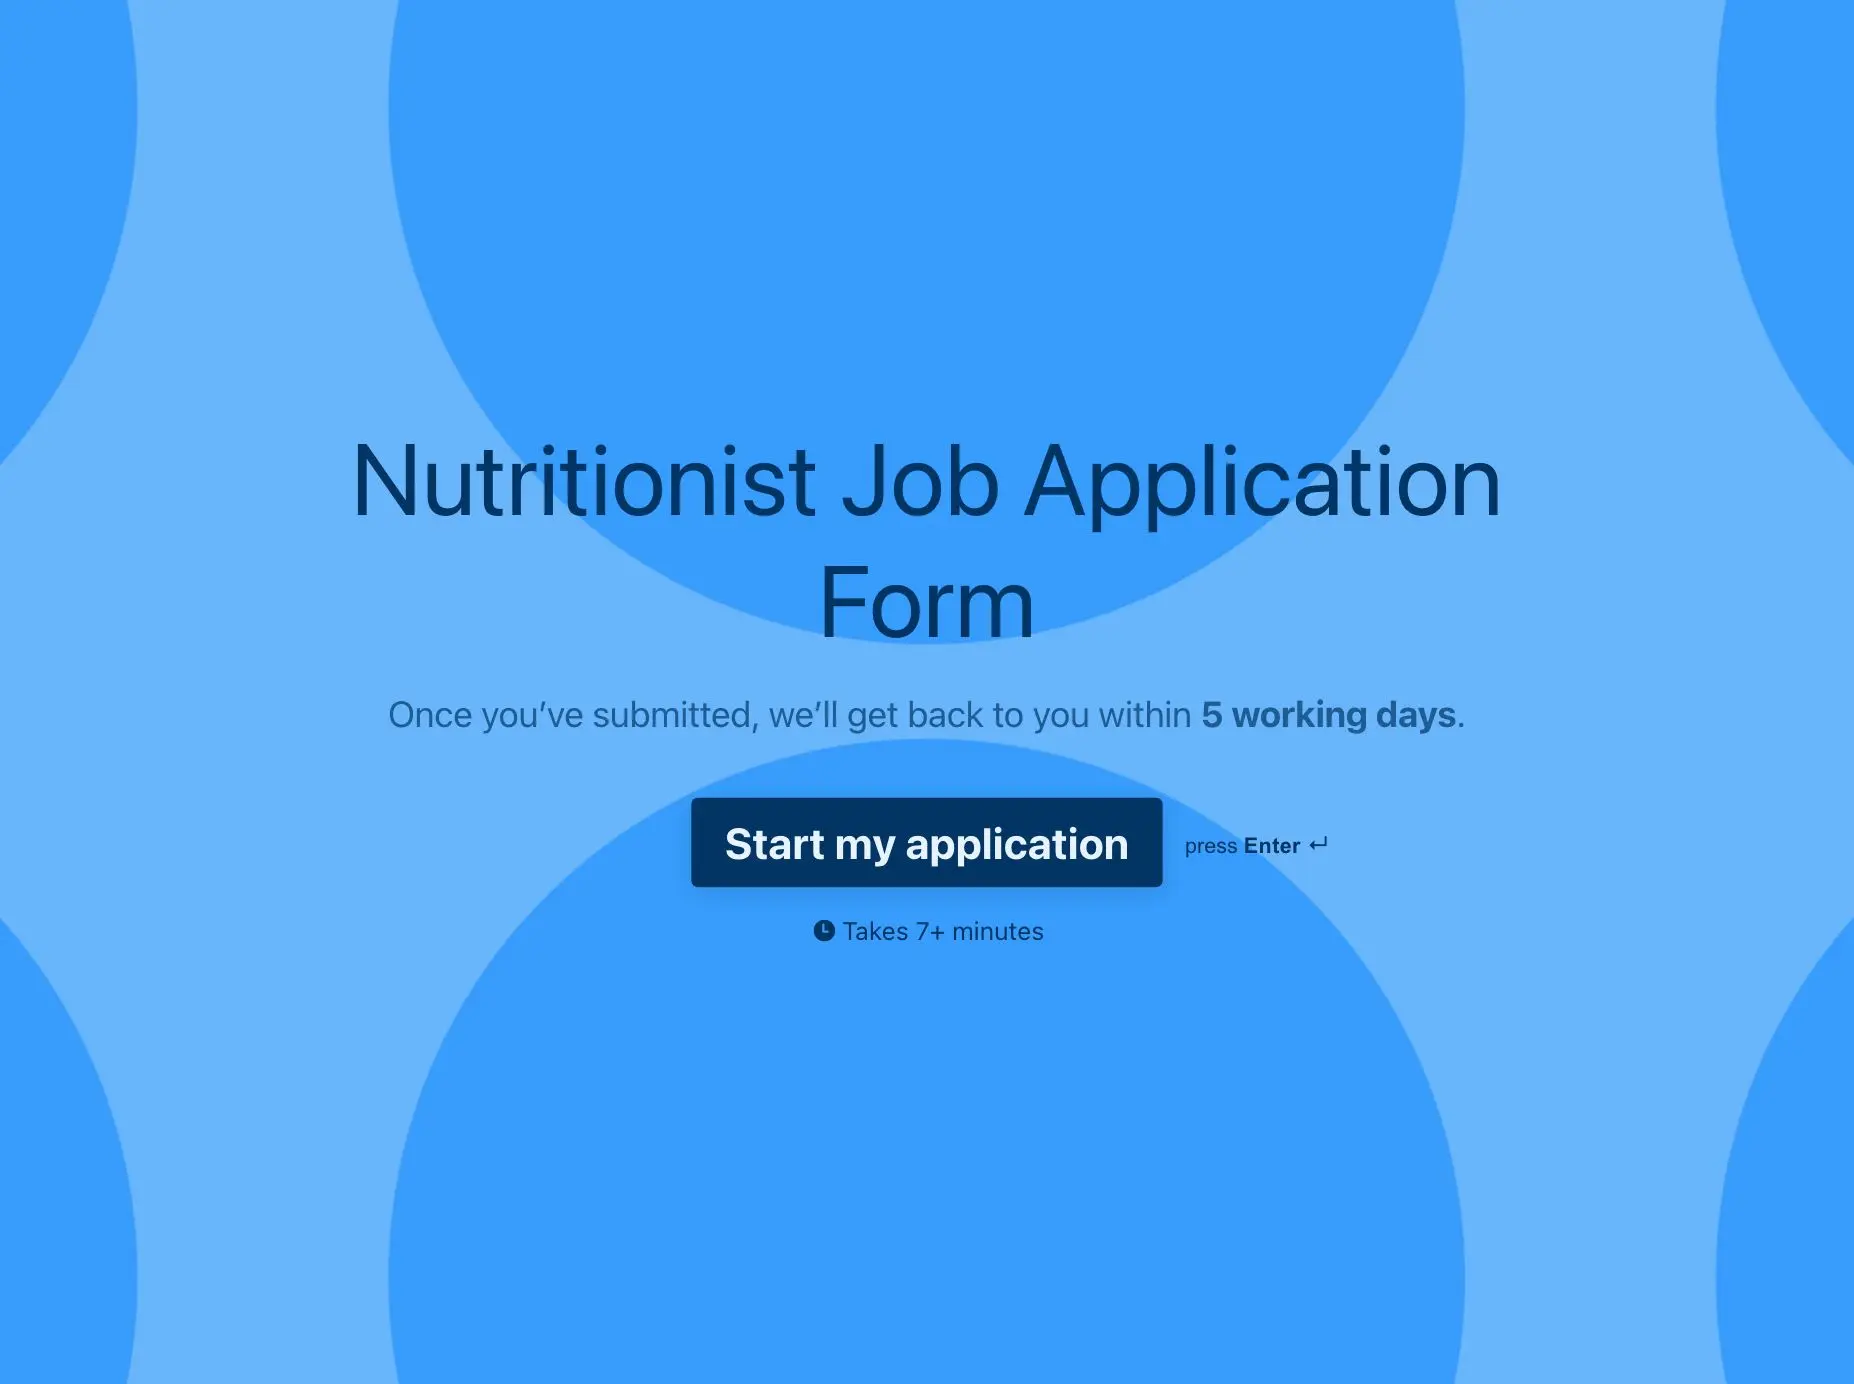 Nutritionist Job Application Form Template Hero